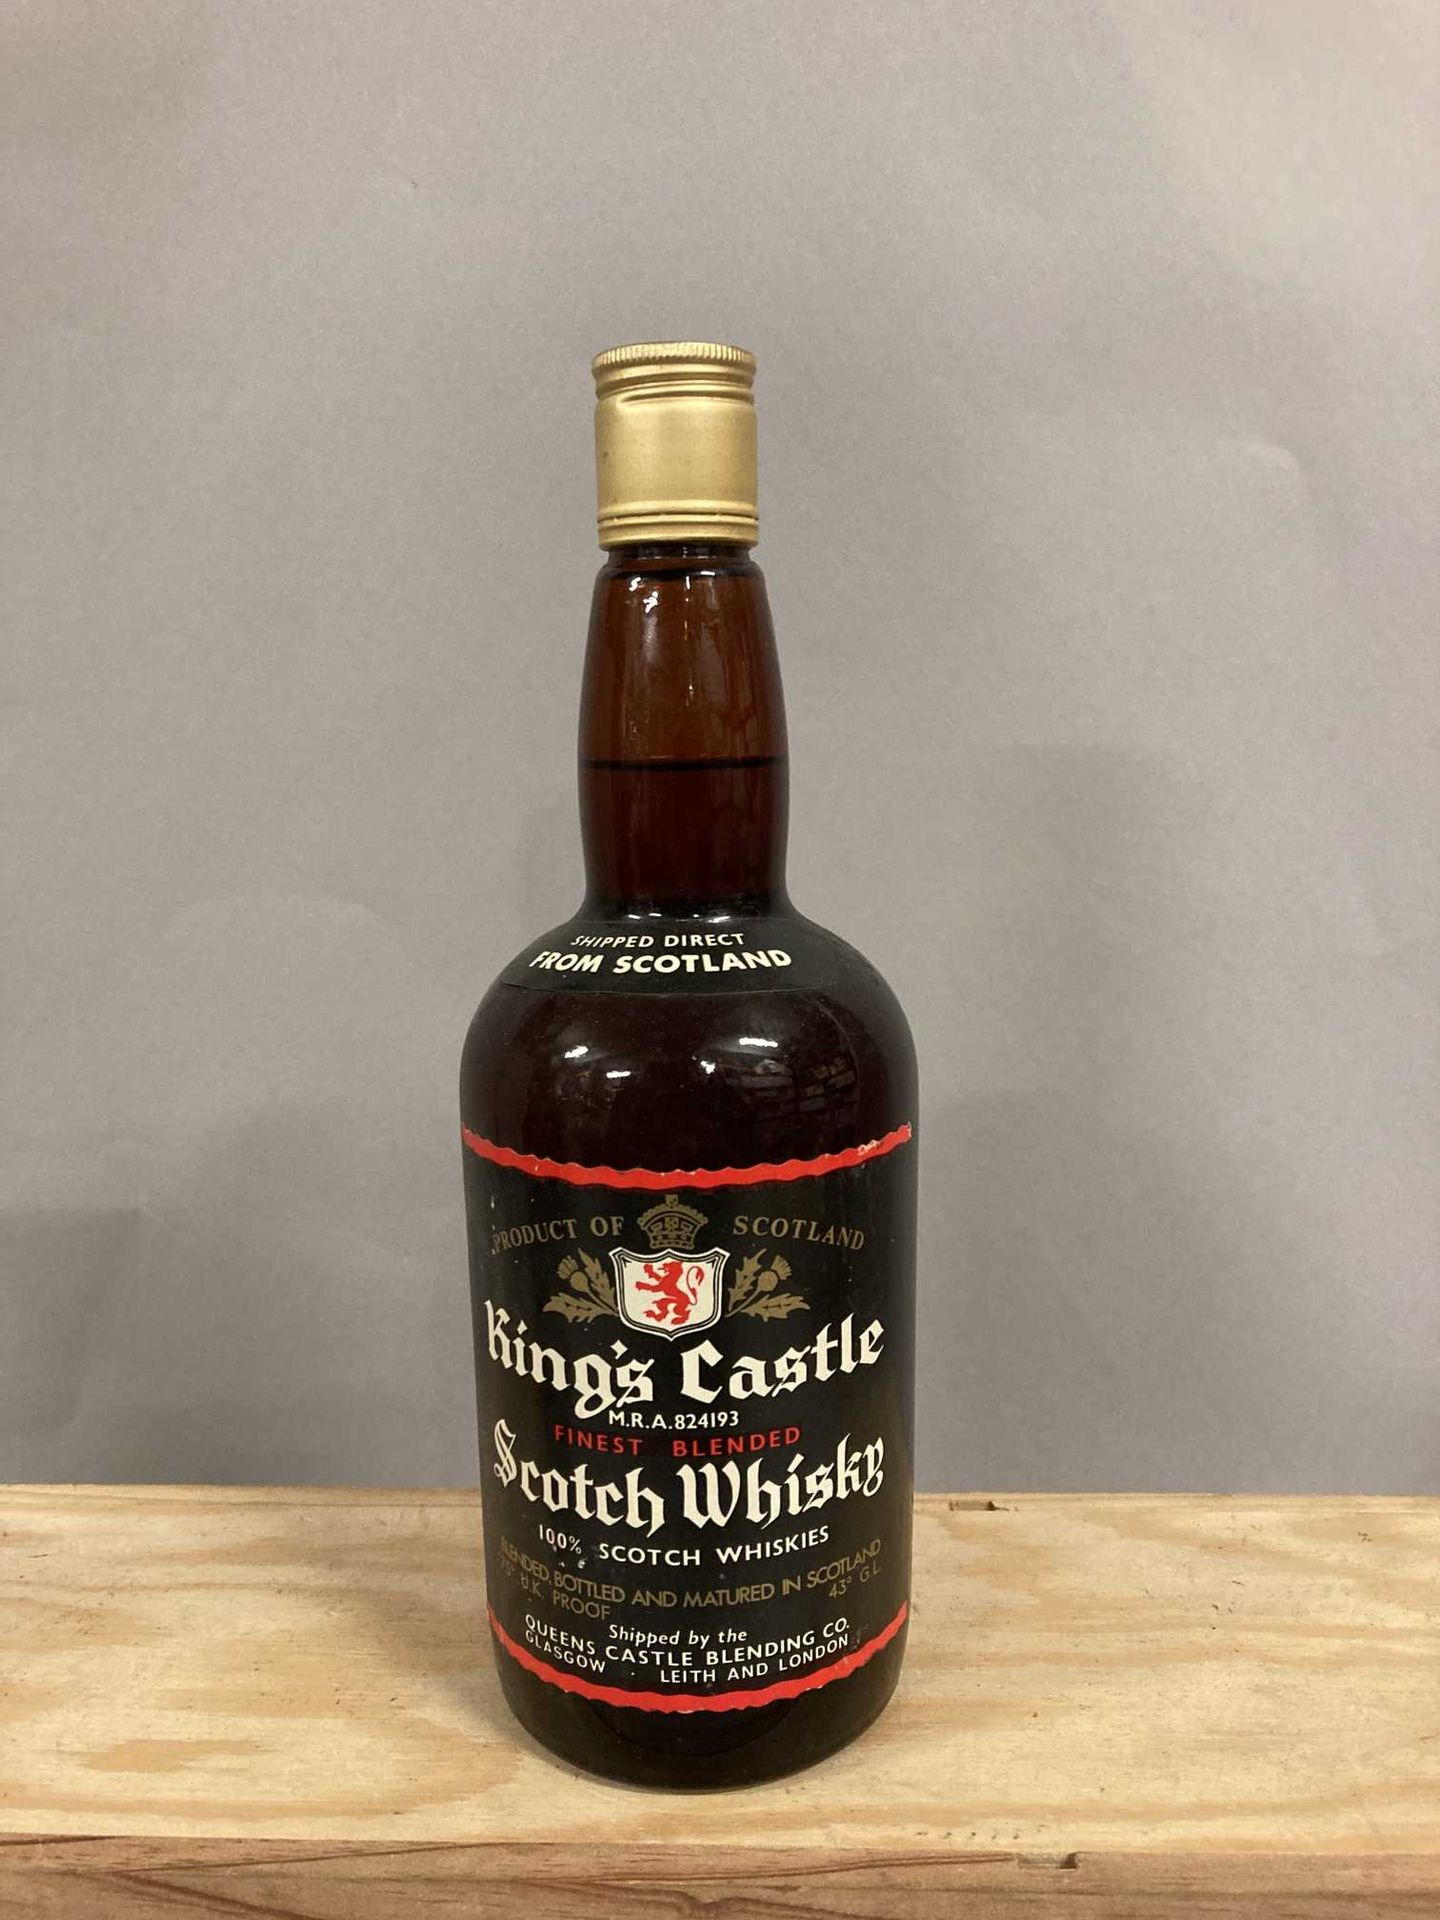 Null 1 bottle SCOTCH WHISKY "King's castle", Queen's castle Blending co.